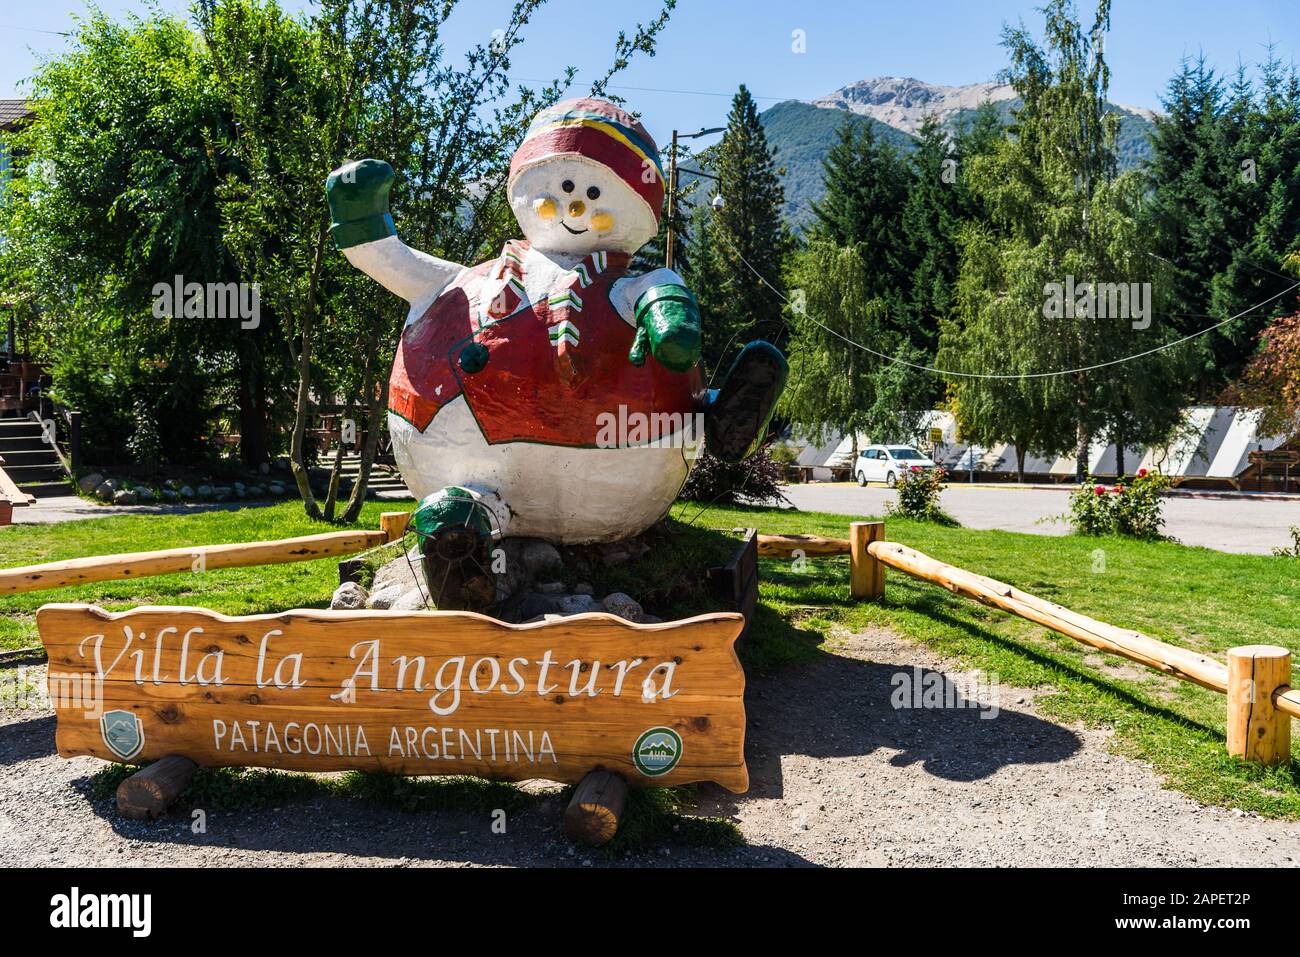 Villa la Angostura, Argentina - March 11, 2019: Snowman with the city name sign Stock Photo